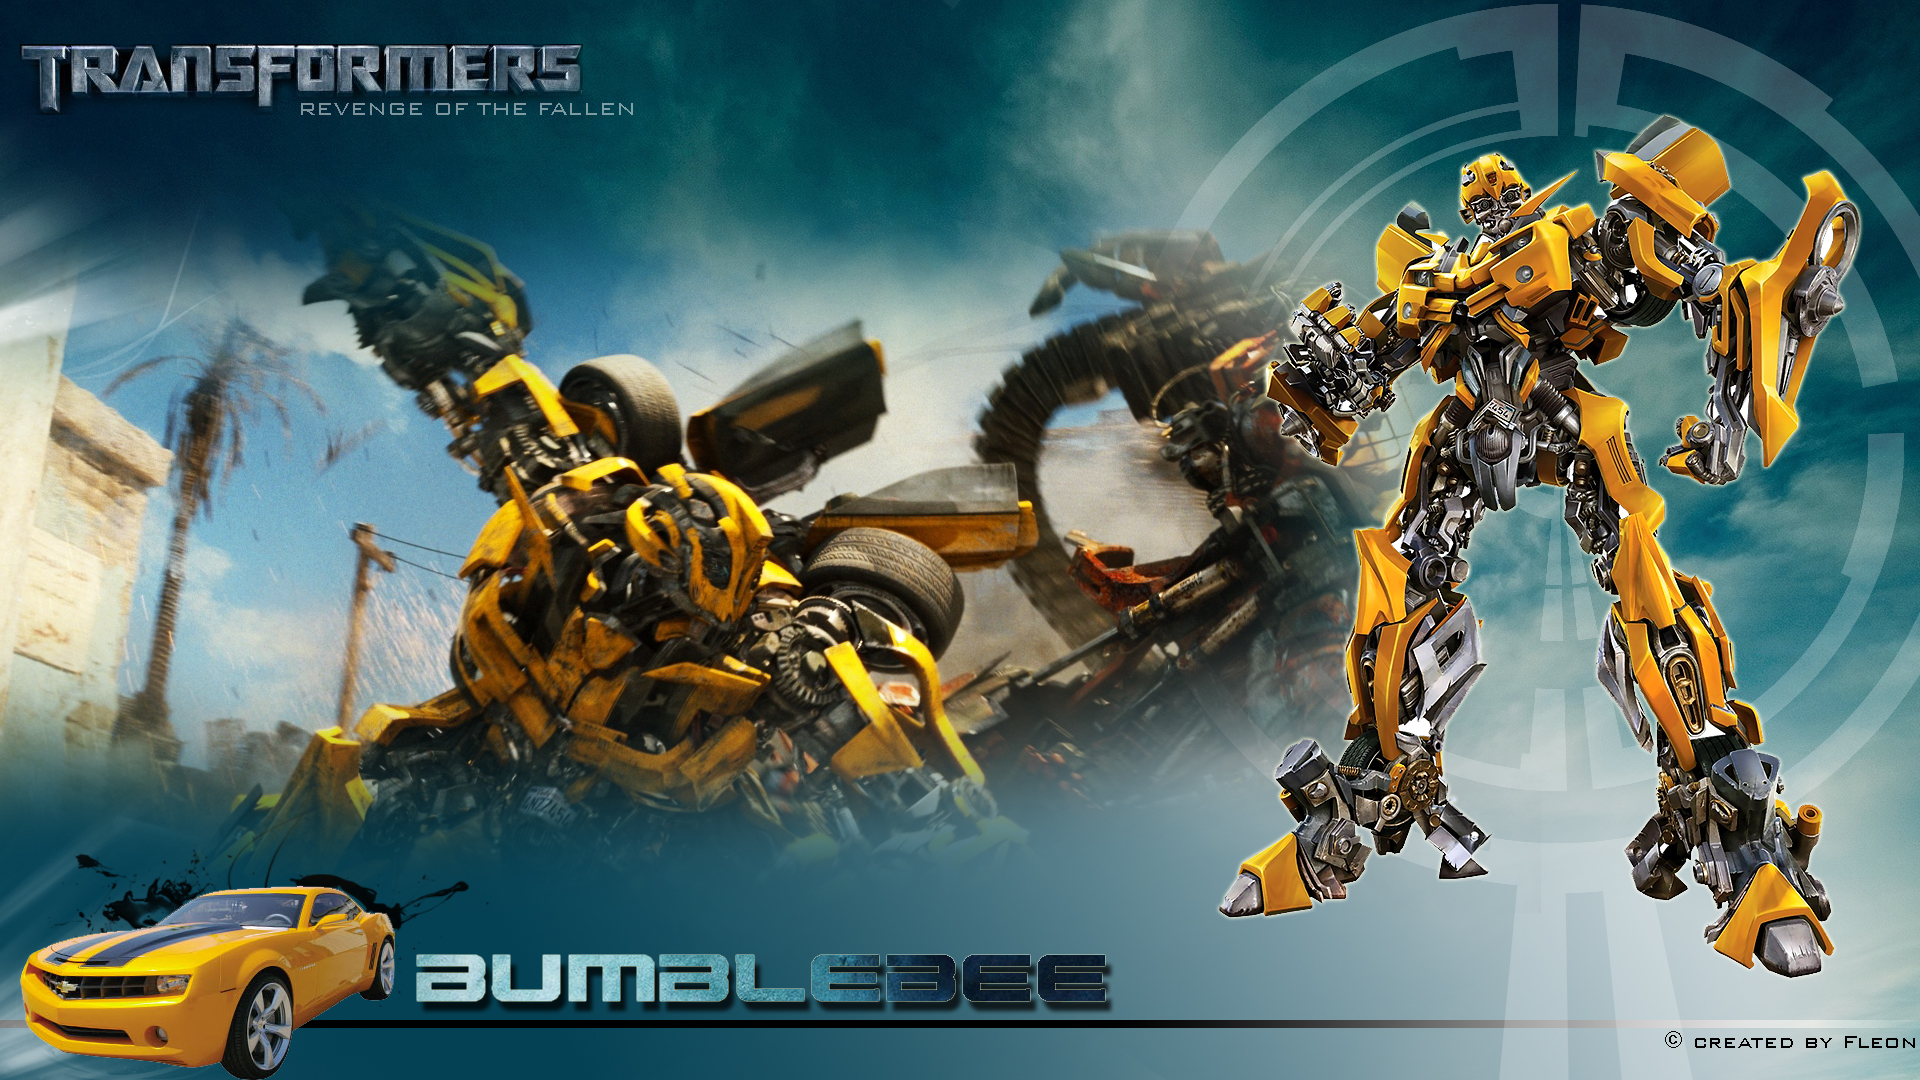 Transformers 2 - Bumblebee